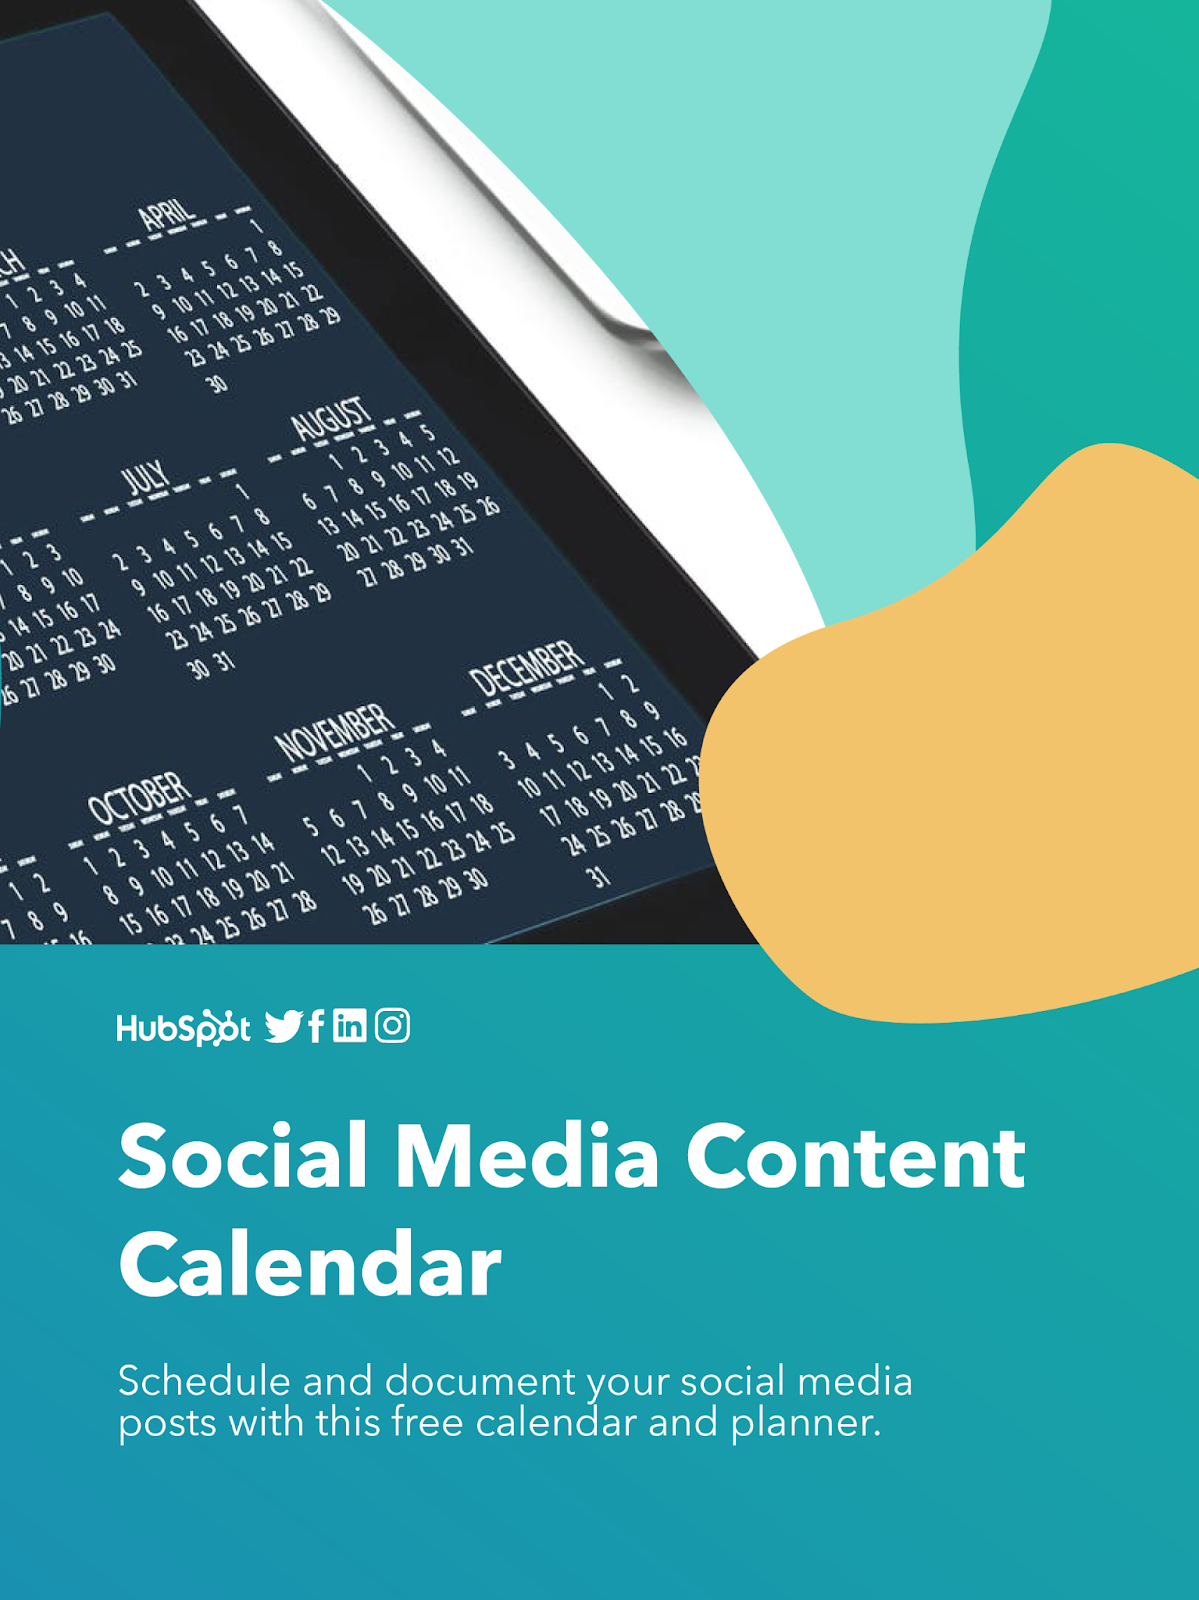 Social media content calendar template